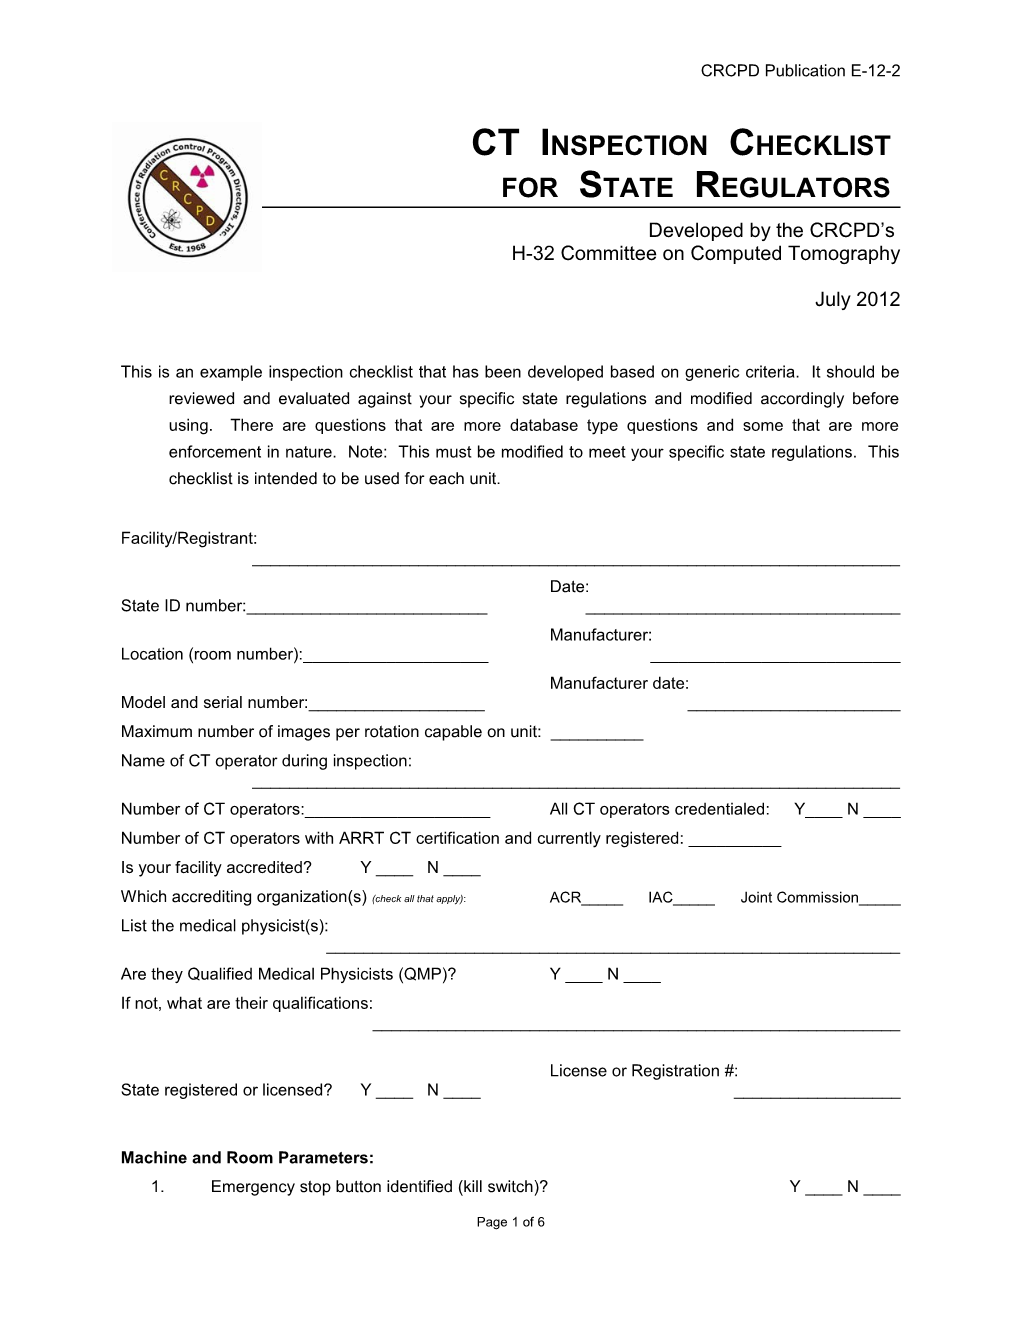 Inspection Check List for State Regulators